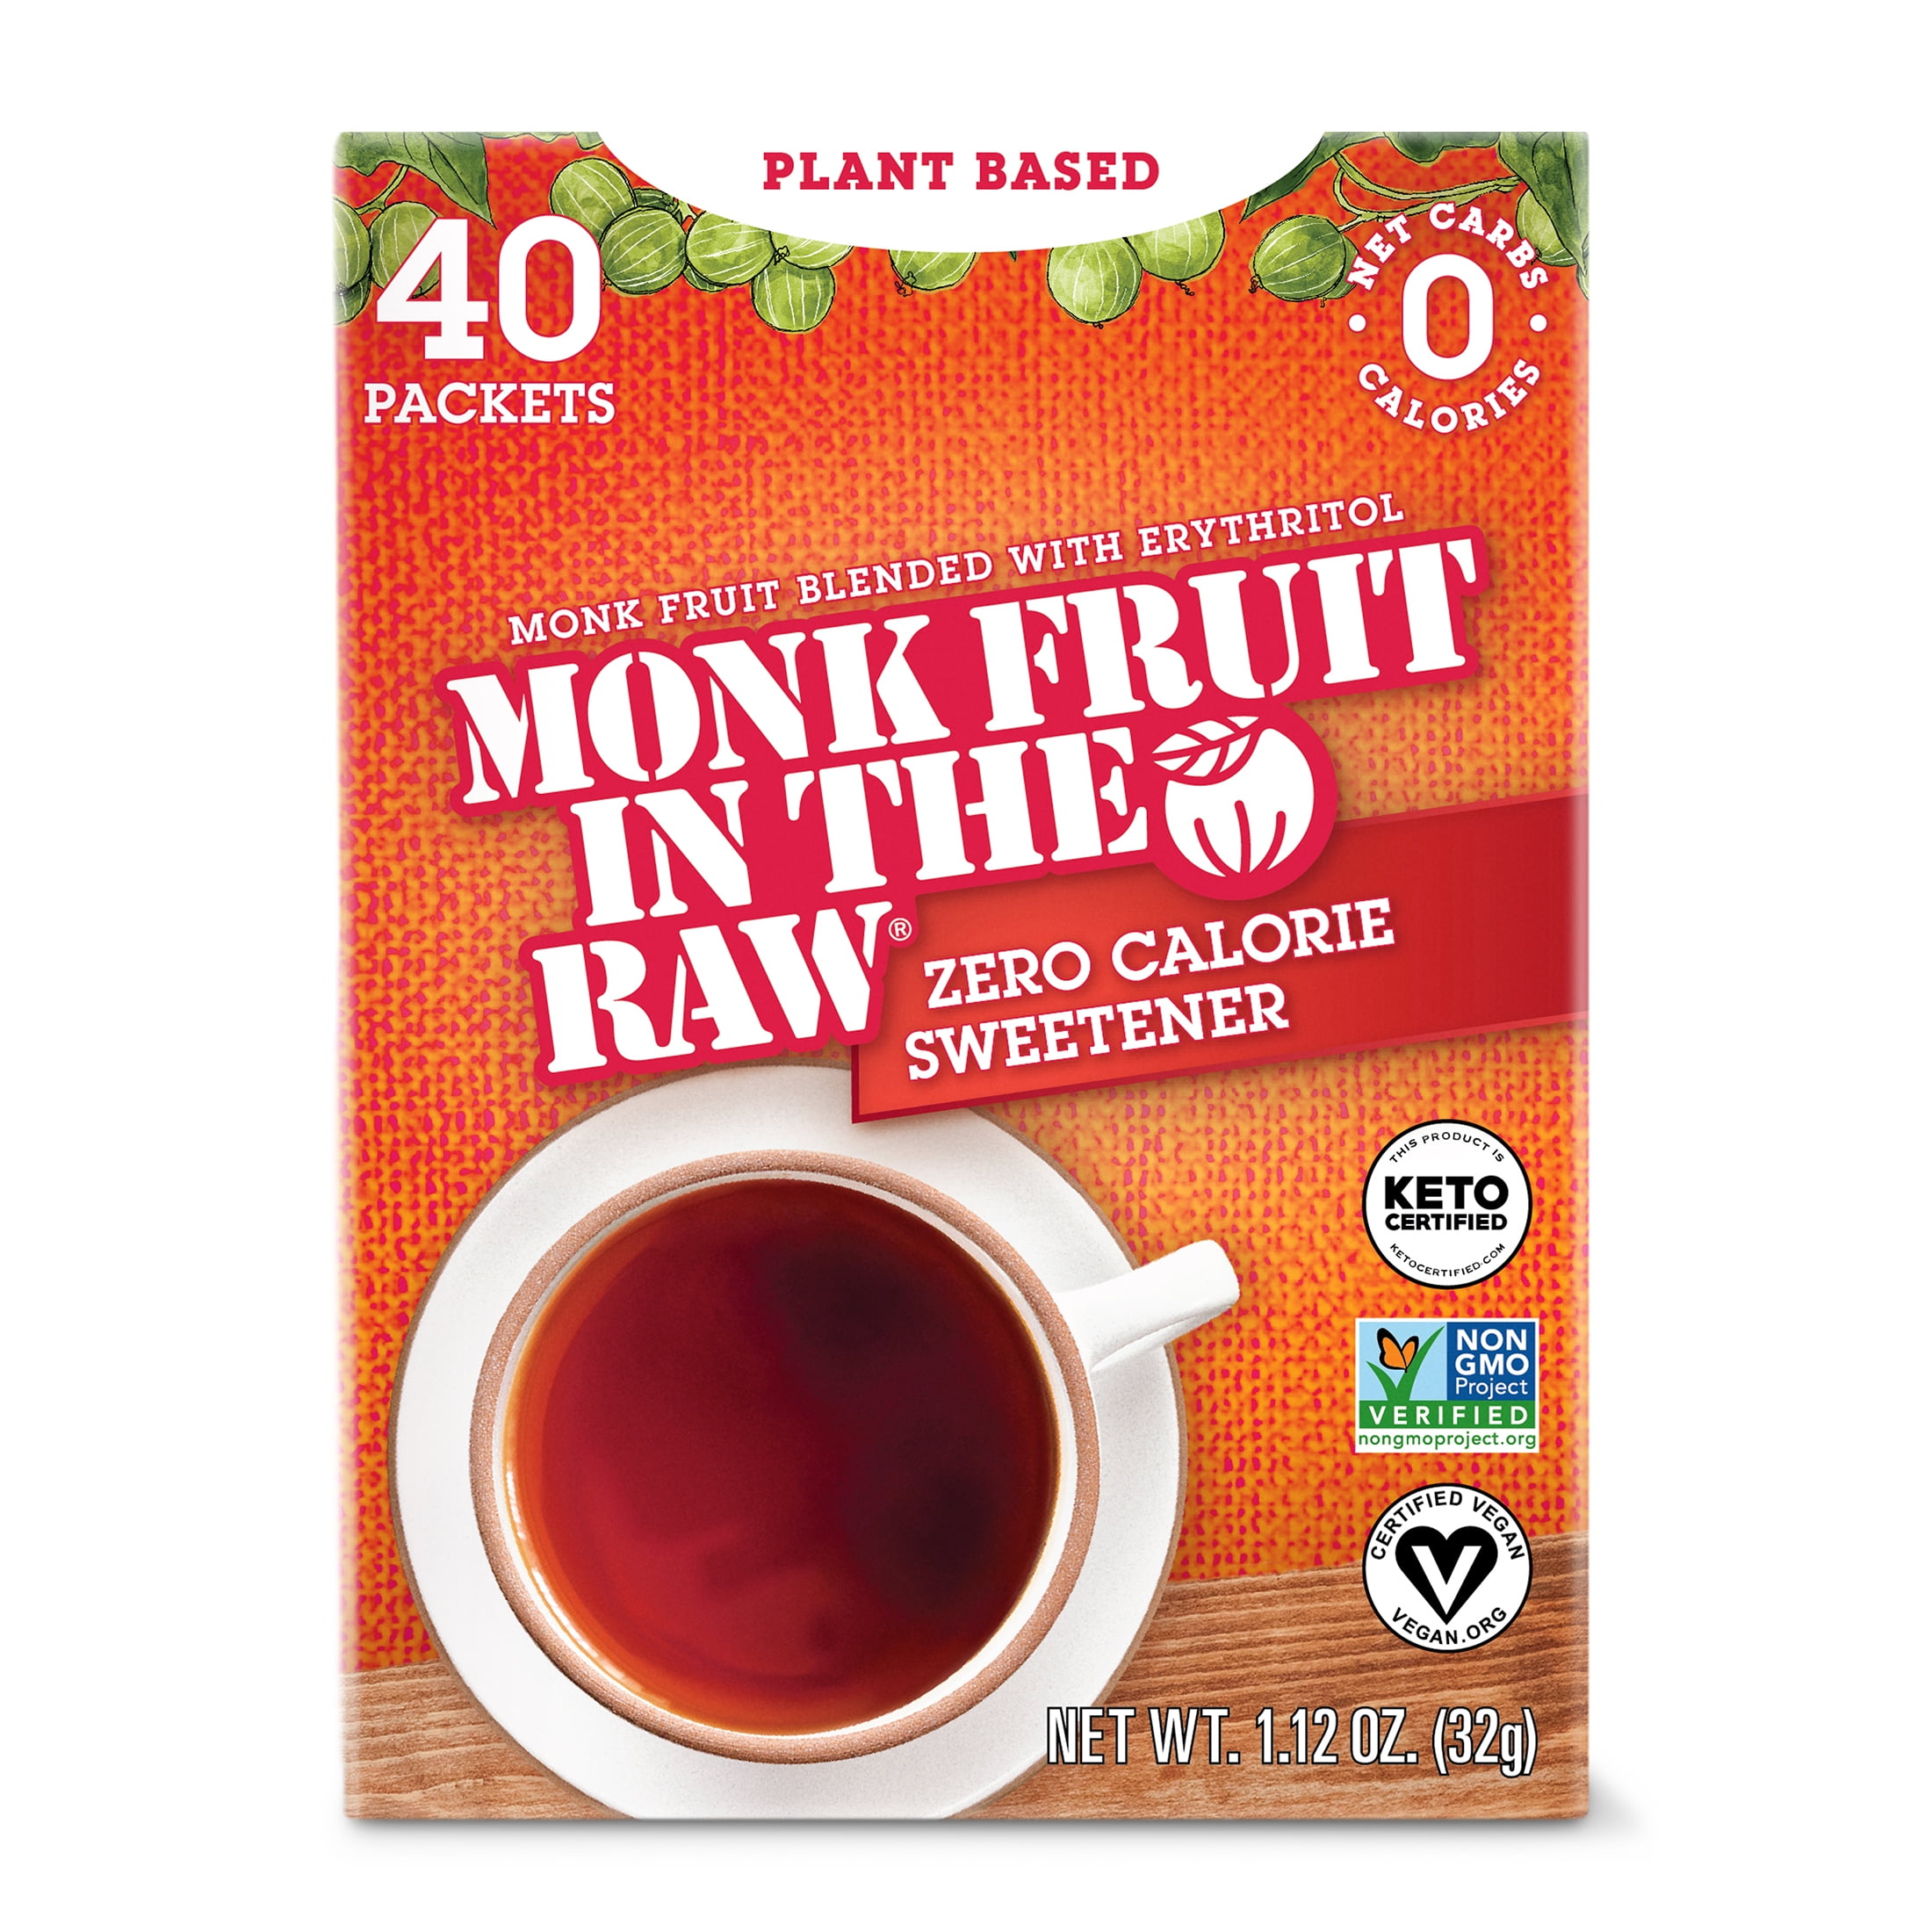 MONK FRUIT IN THE RAW, Natural Monk Fruit Sweetener w/ Erythritol,  Sugar-Free Keto, Gluten Free, Zero Calorie, Low Carb, Vegan, Sugar  Substitute, 16